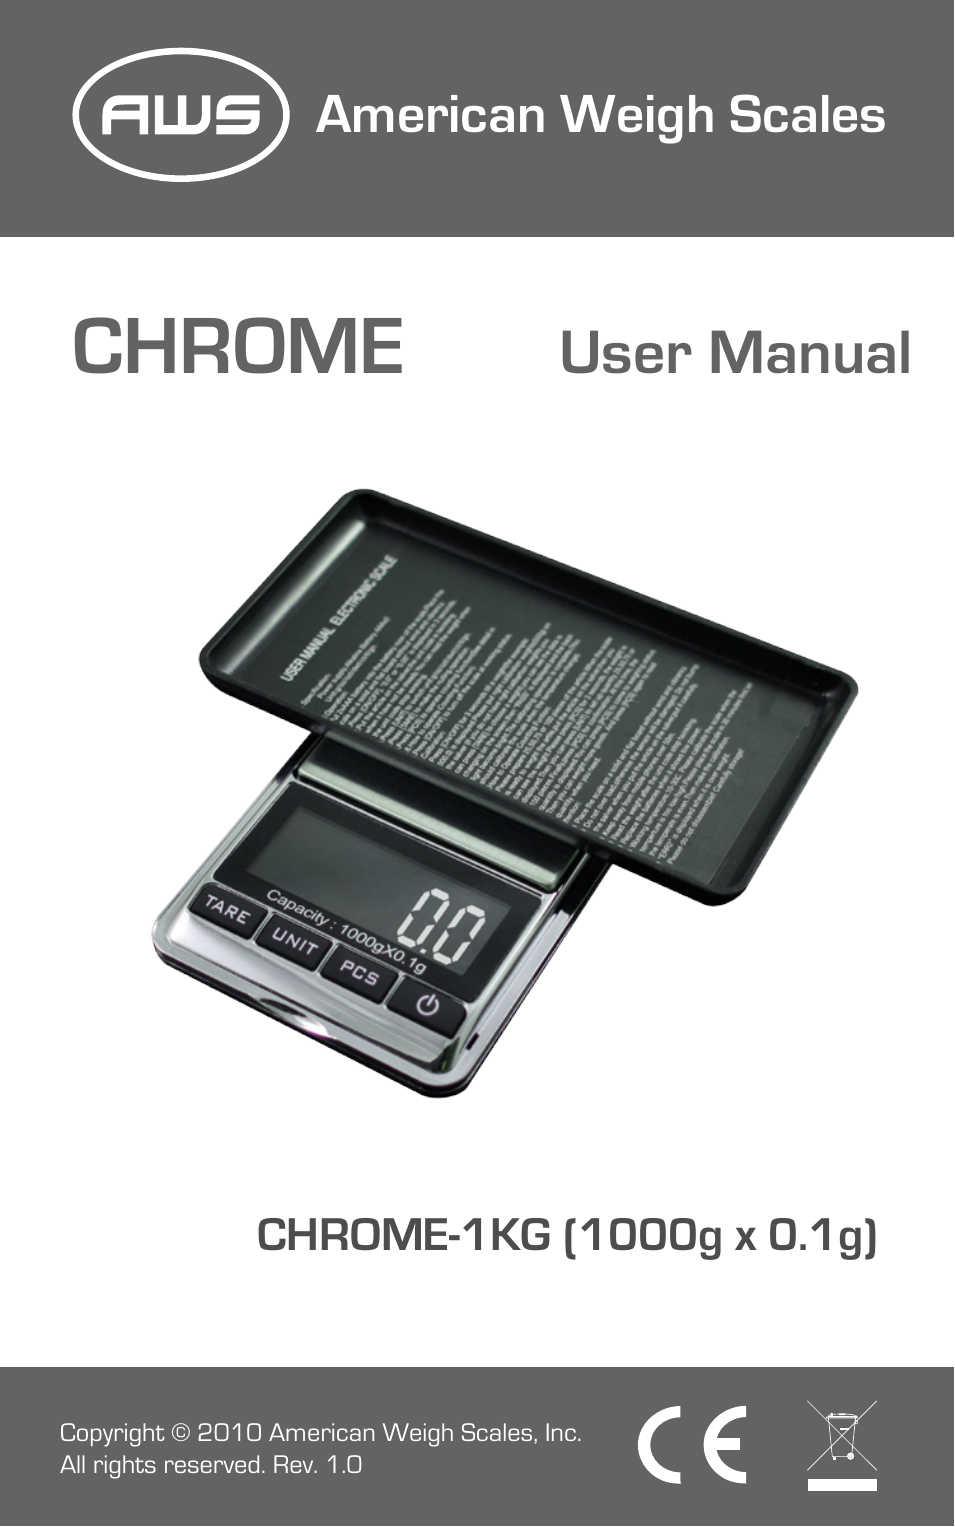 CHROME-1KG